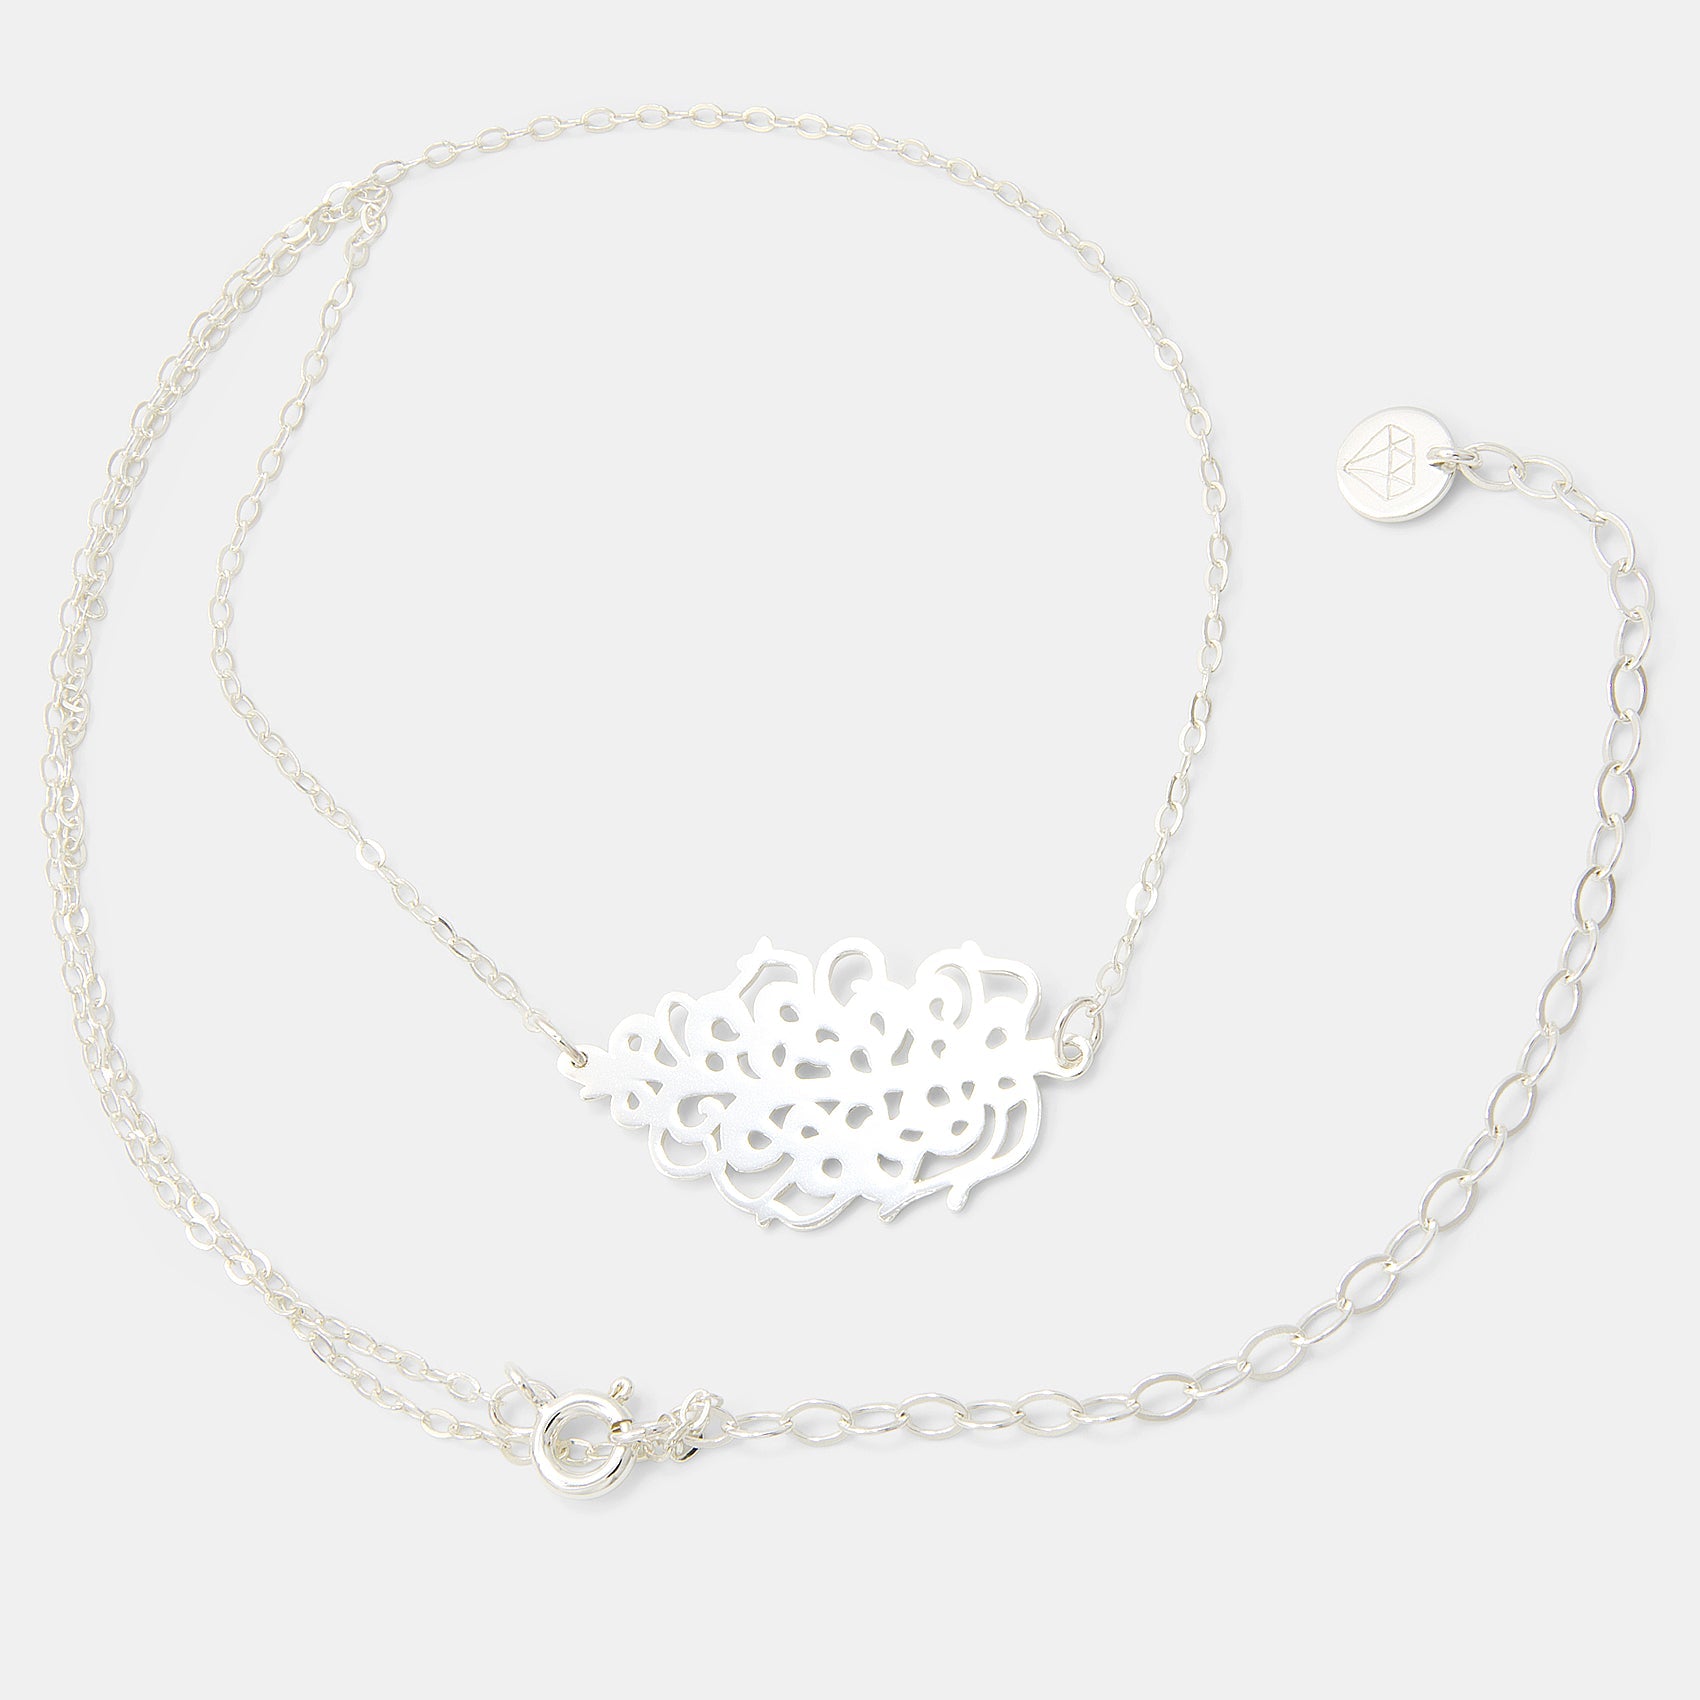 Grevillea Flower Silver Chain Necklace - Simone Walsh Jewellery Australia